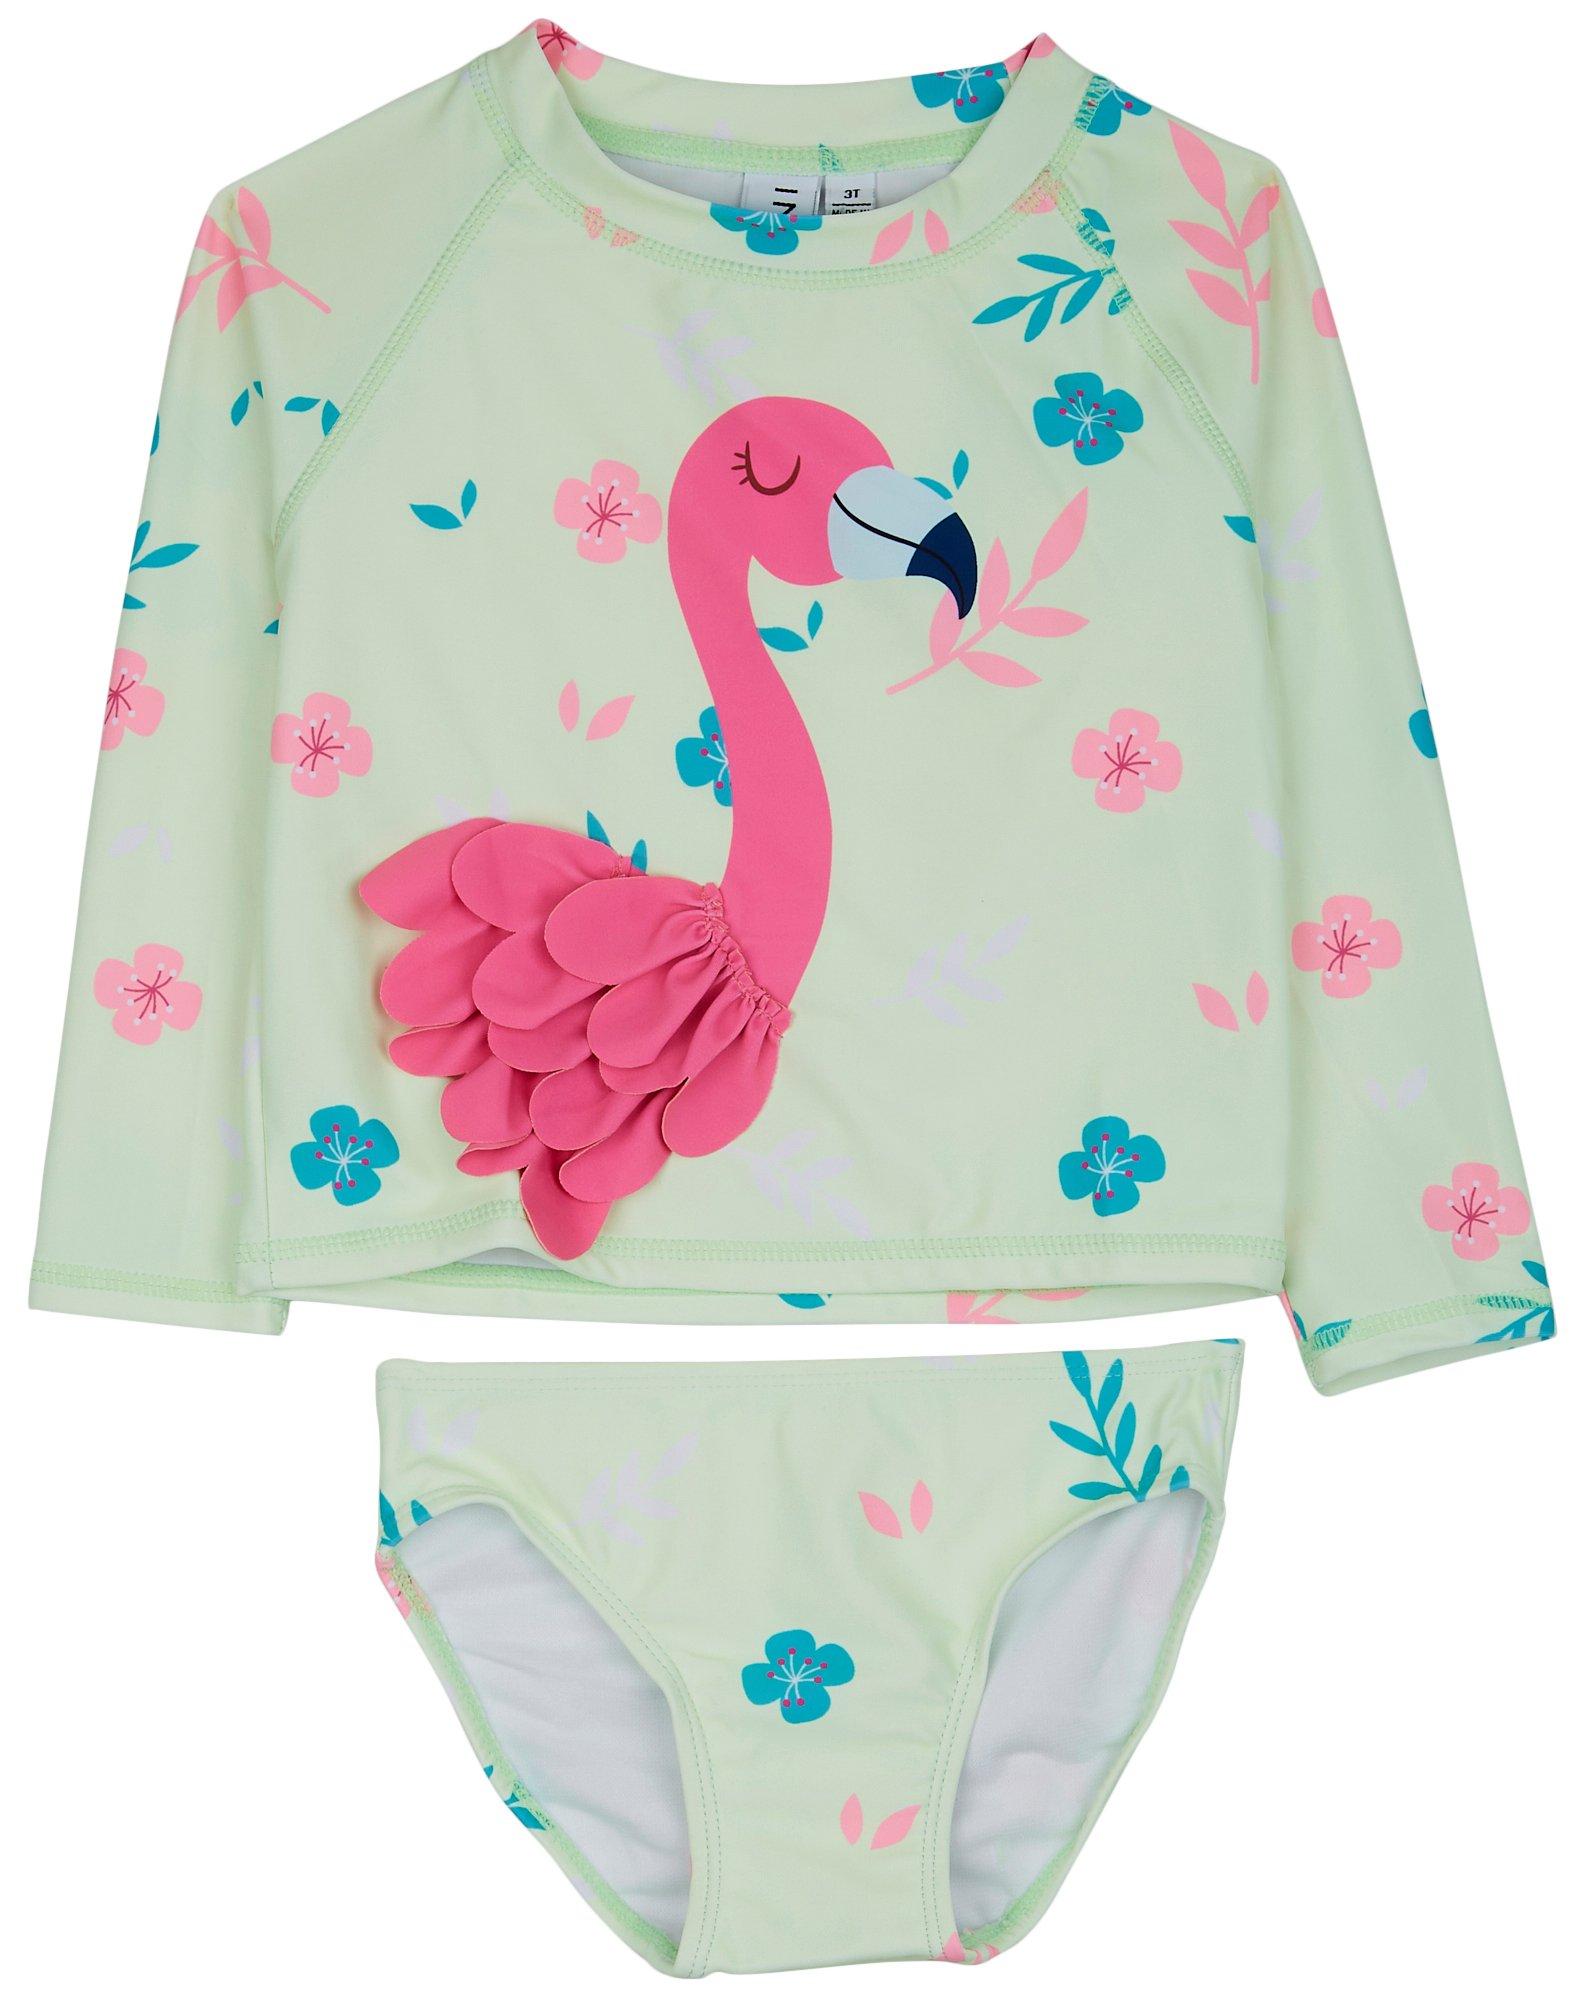 In Gear Toddler Girls 2-pc. Flamingo Rashguard Swimsuit Set